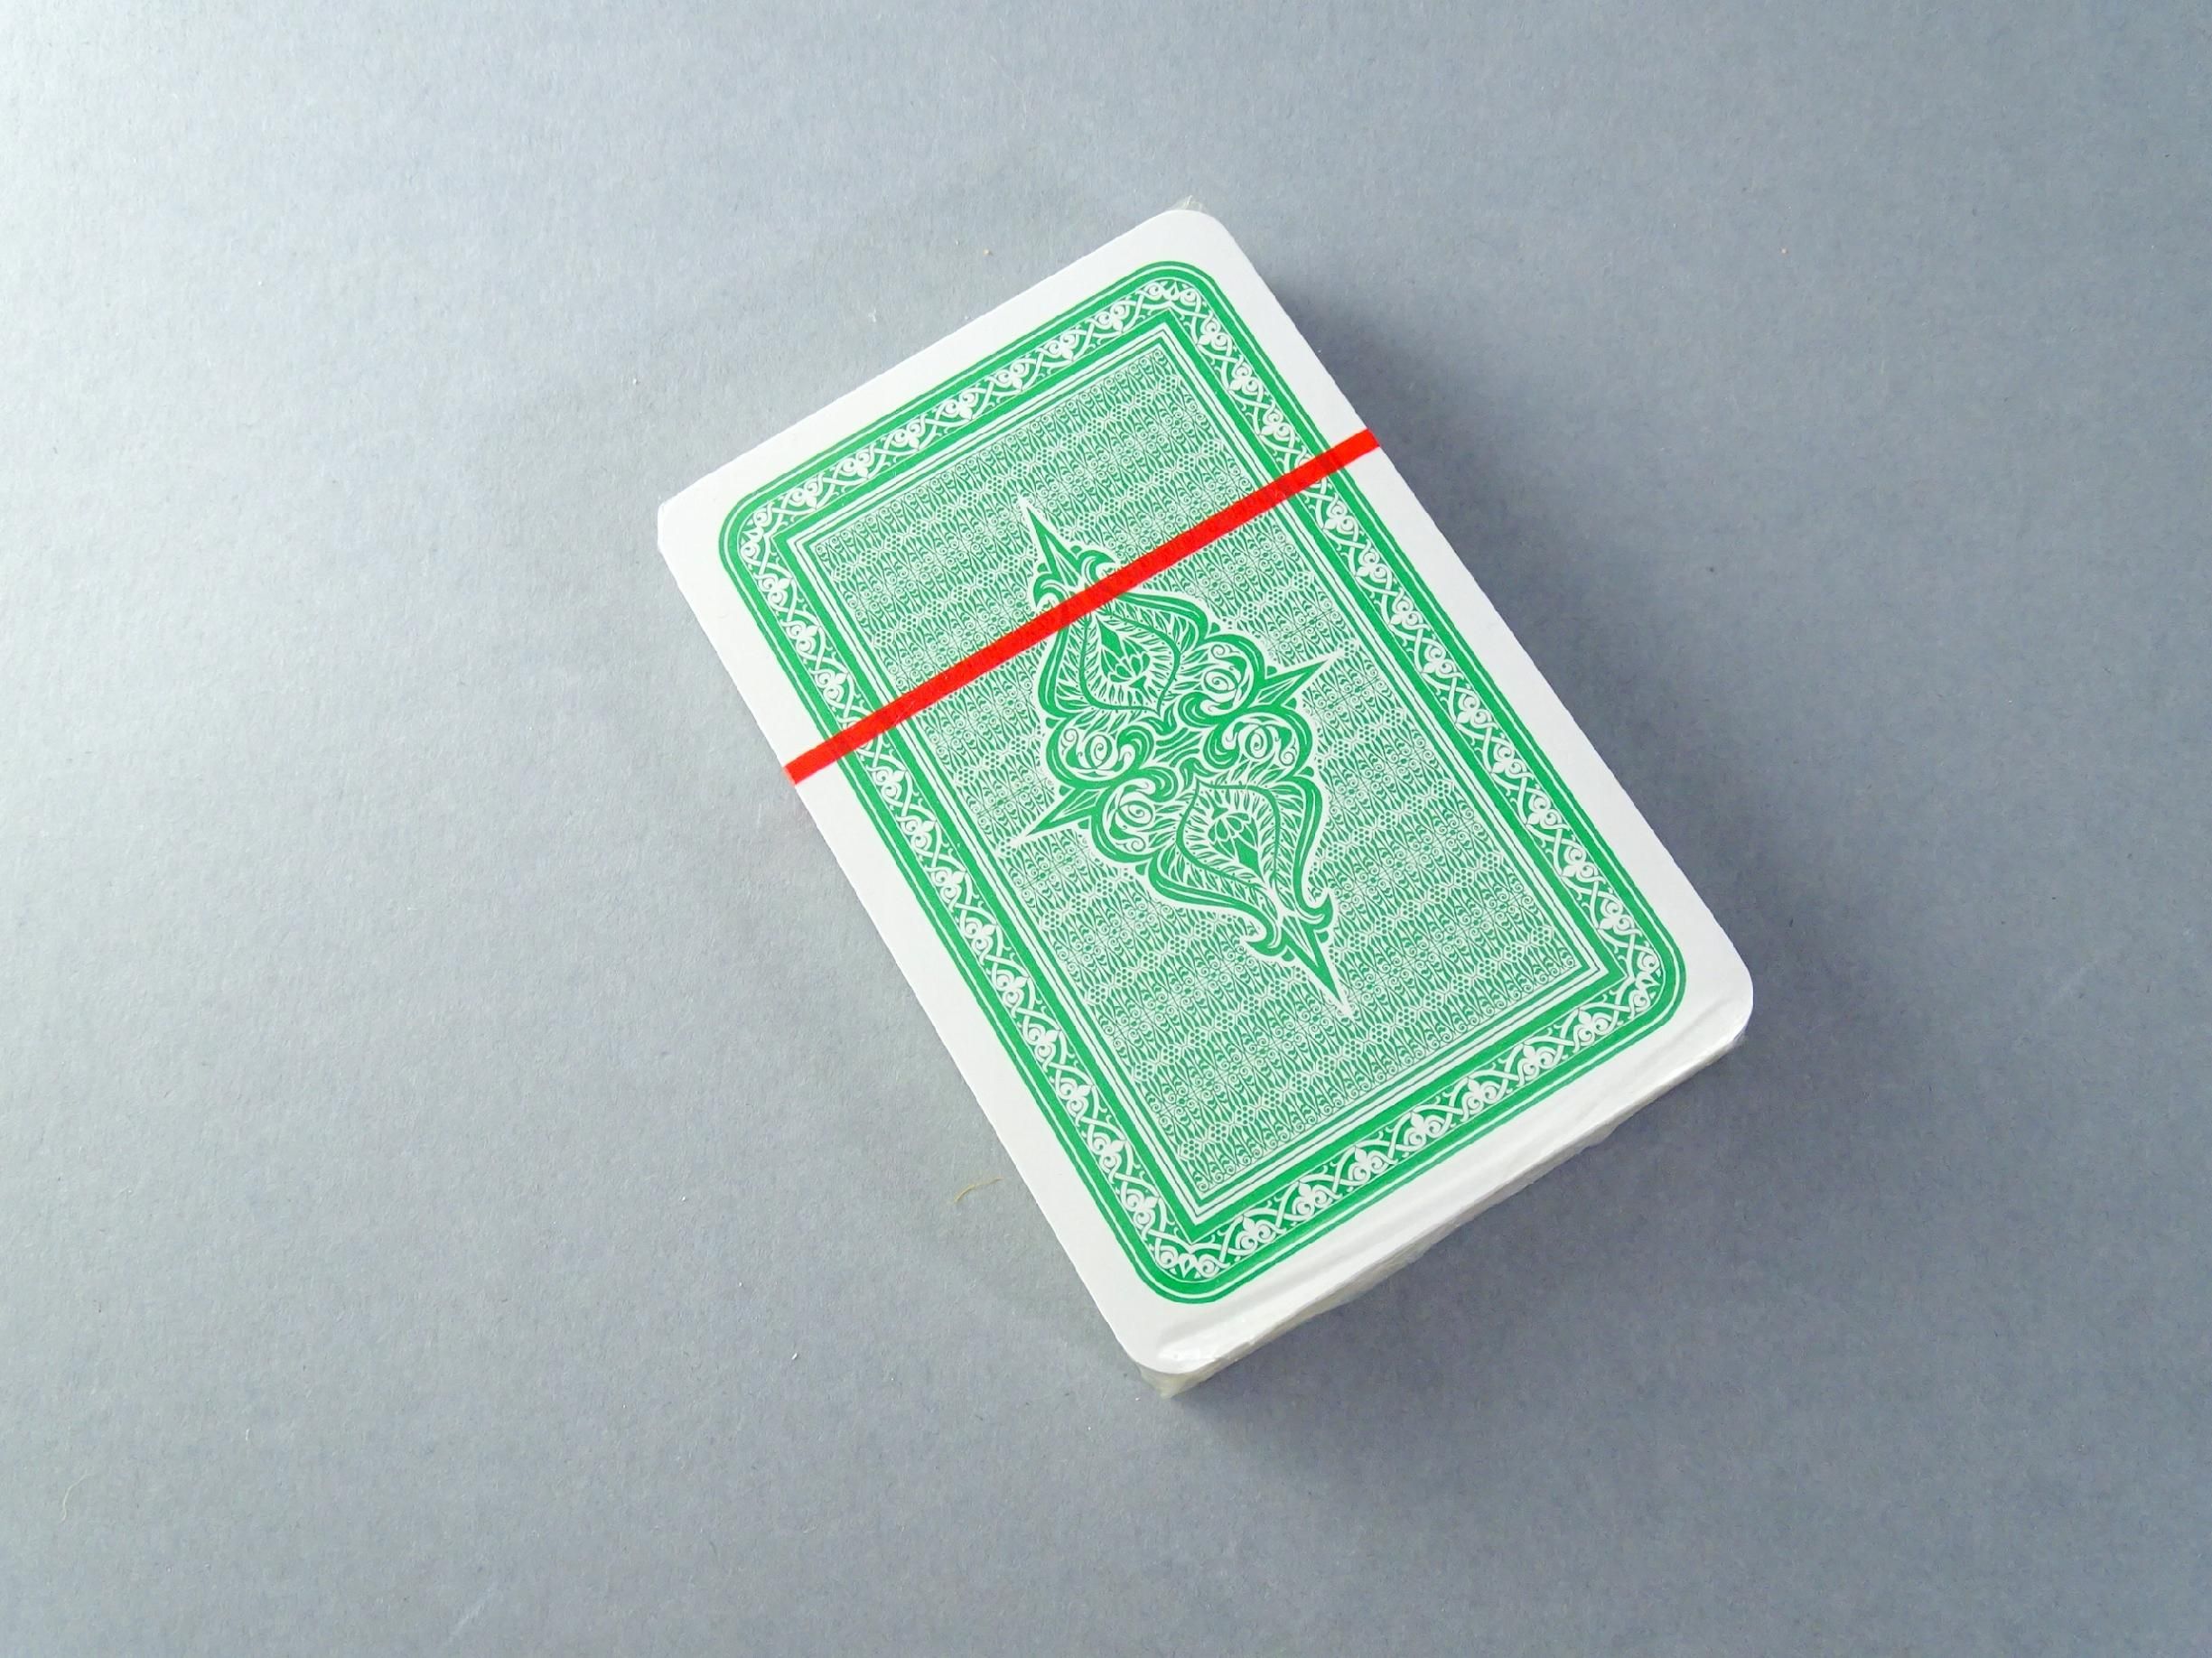 stare karty do gry w skat berliner spielkarten